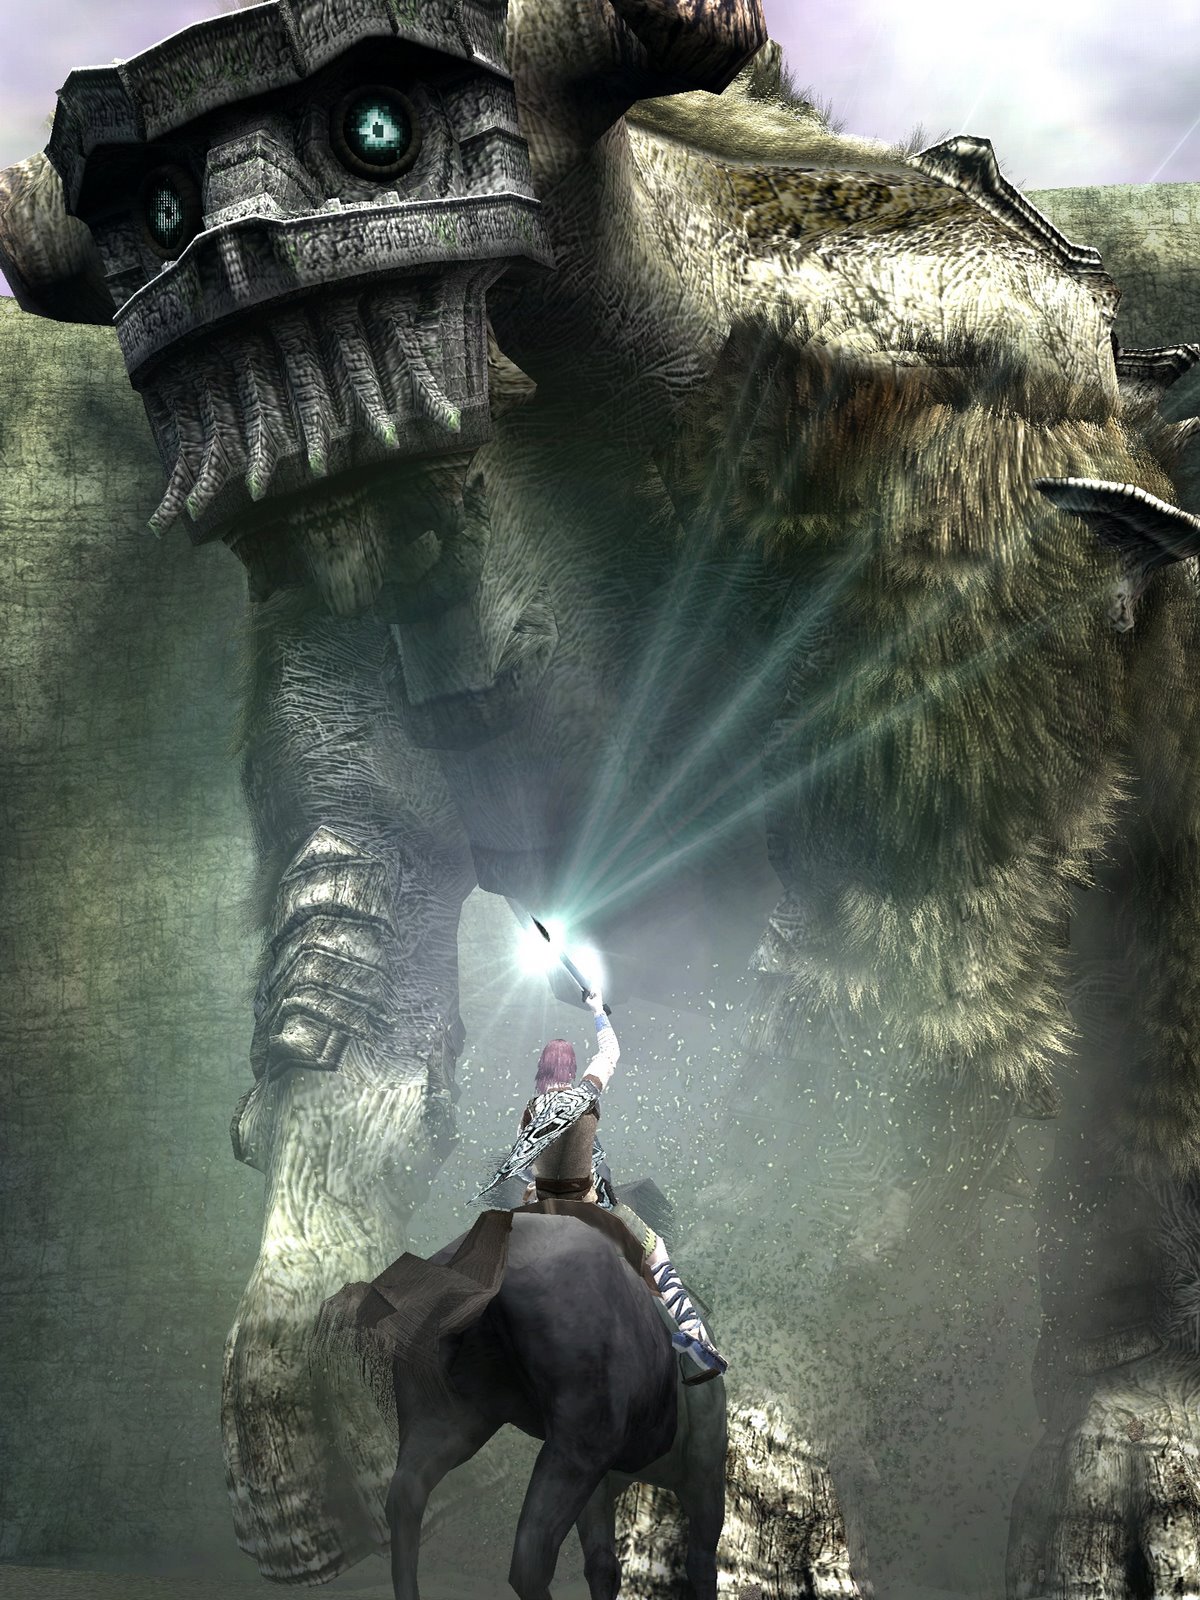 Detonado de Shadow of the Colossus (PS2) - (Level Hard) - Parte 9 - Basaran  